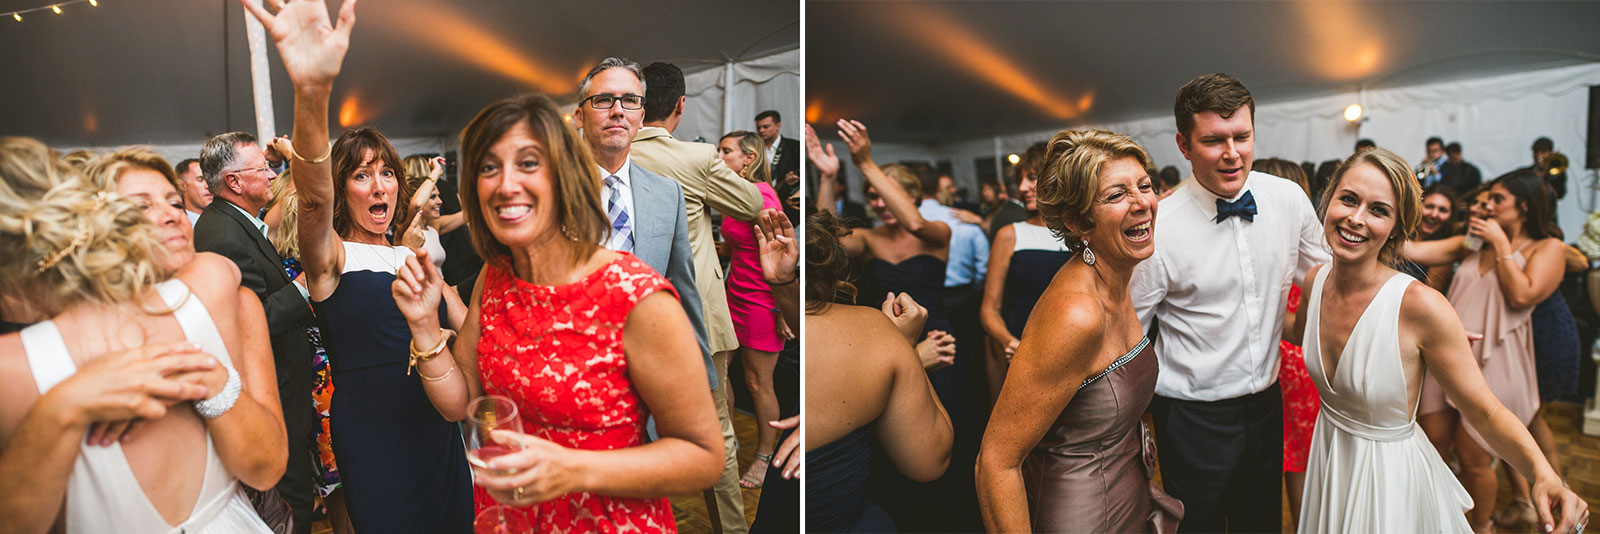 83 conway farms golf club reception - Stephanie + Zack // Conway Farms Chicago Wedding Photographers